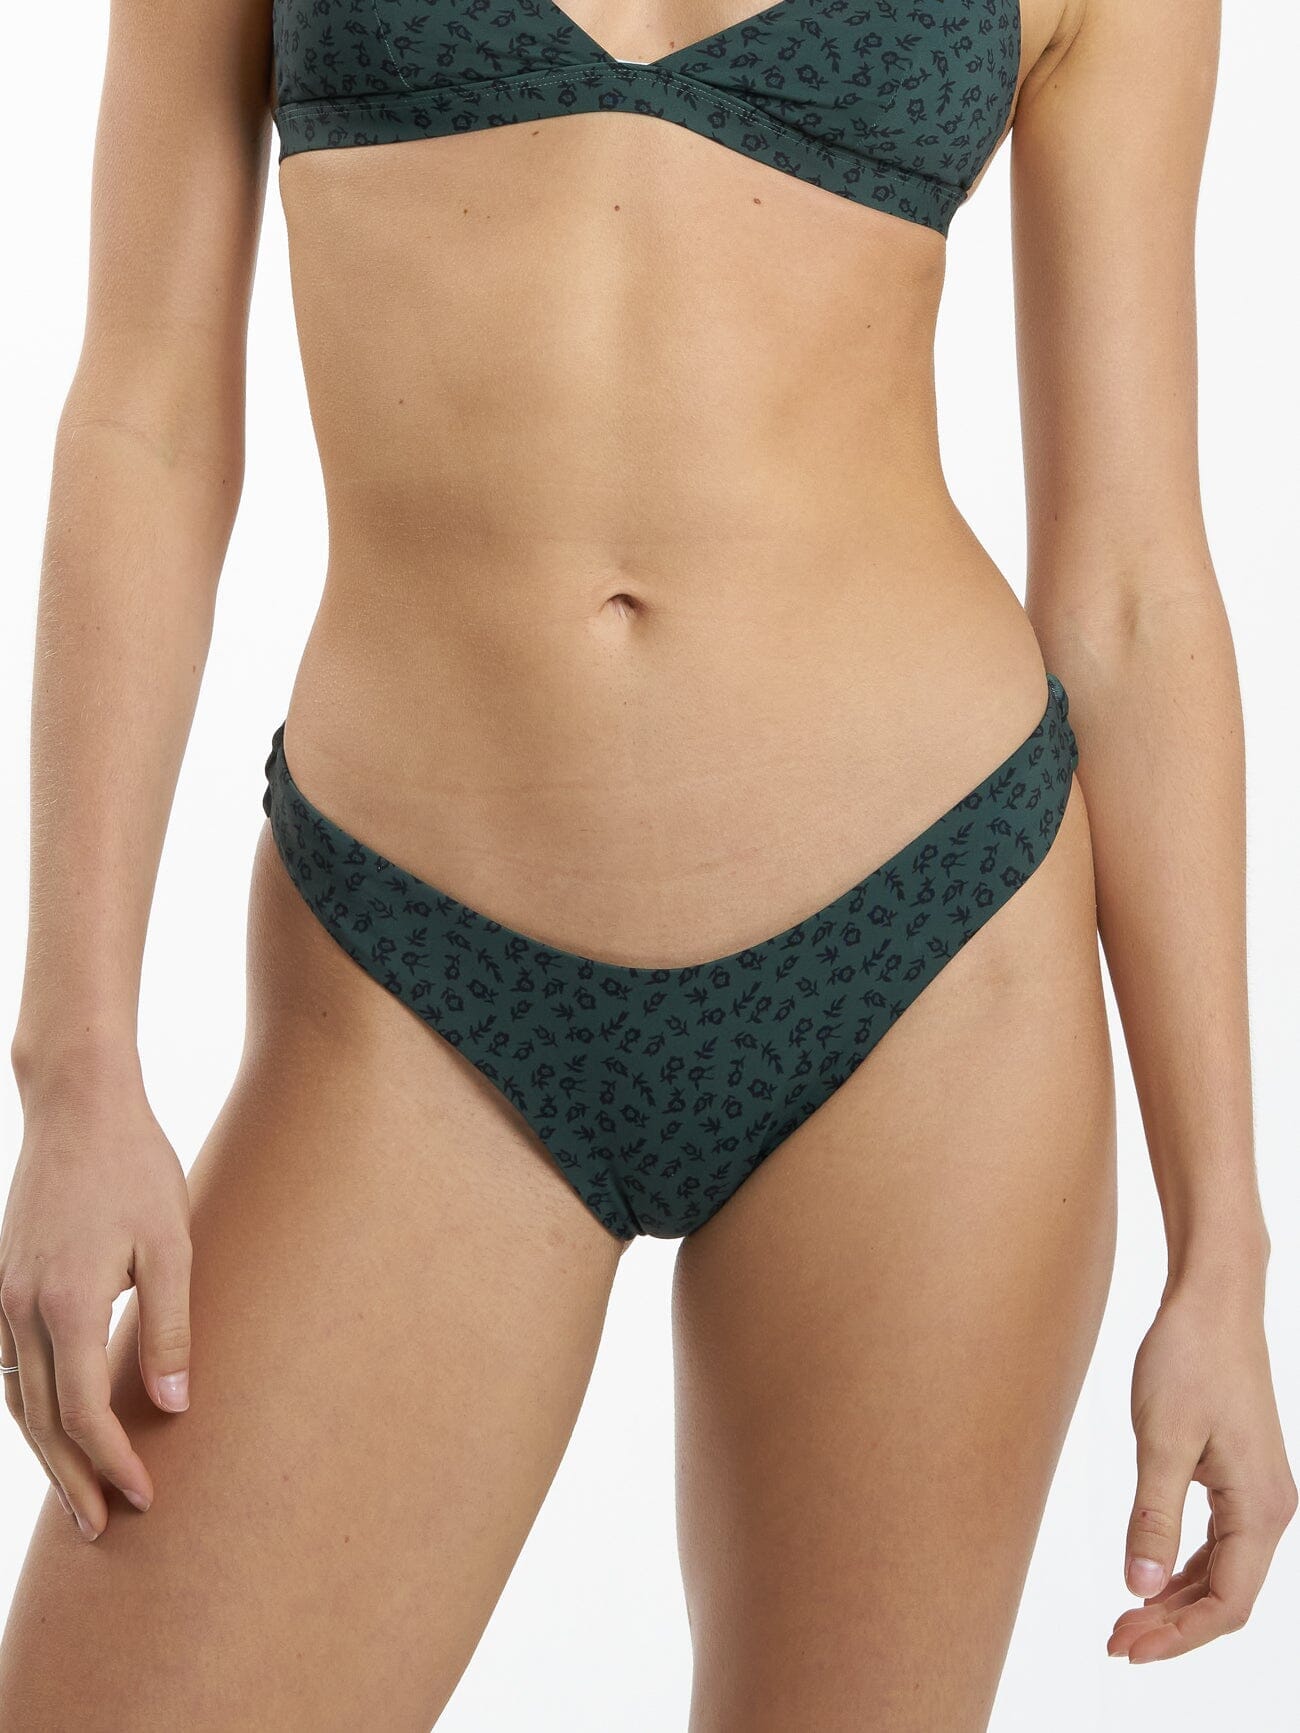 SELONE Plus Size Swimsuit for Women 3 Piece Bikini Tube Top